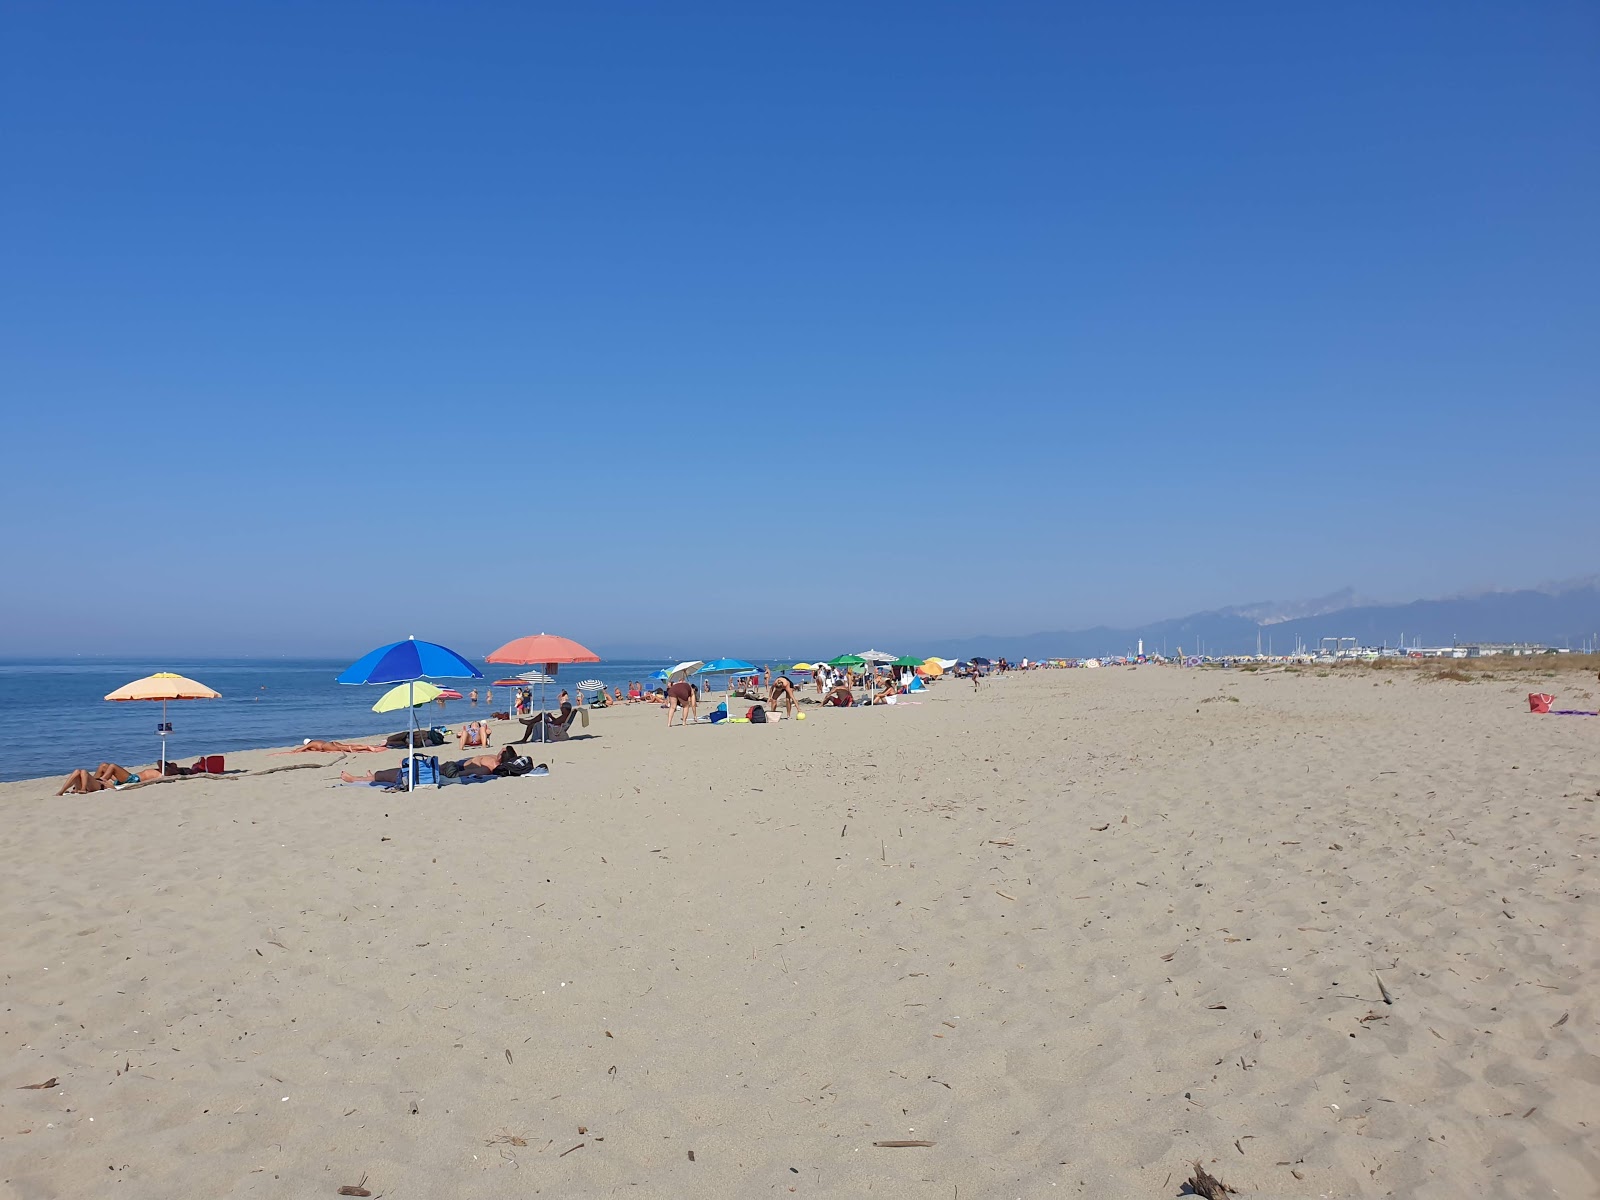 Photo of Spiaggia della Lecciona - popular place among relax connoisseurs